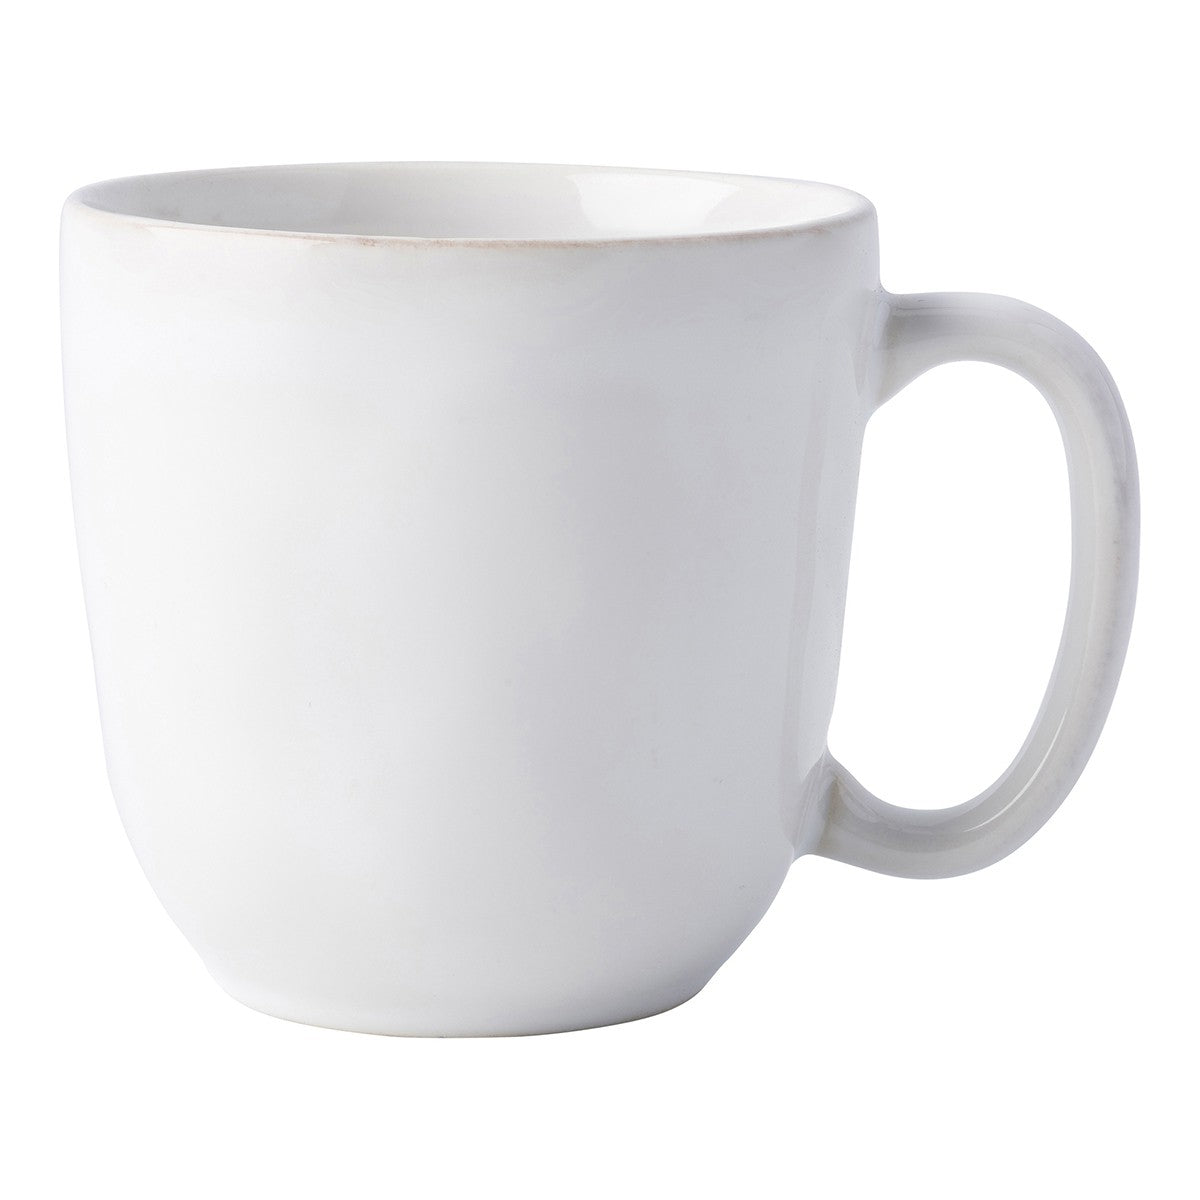 puro coffee or tea mug on a white background